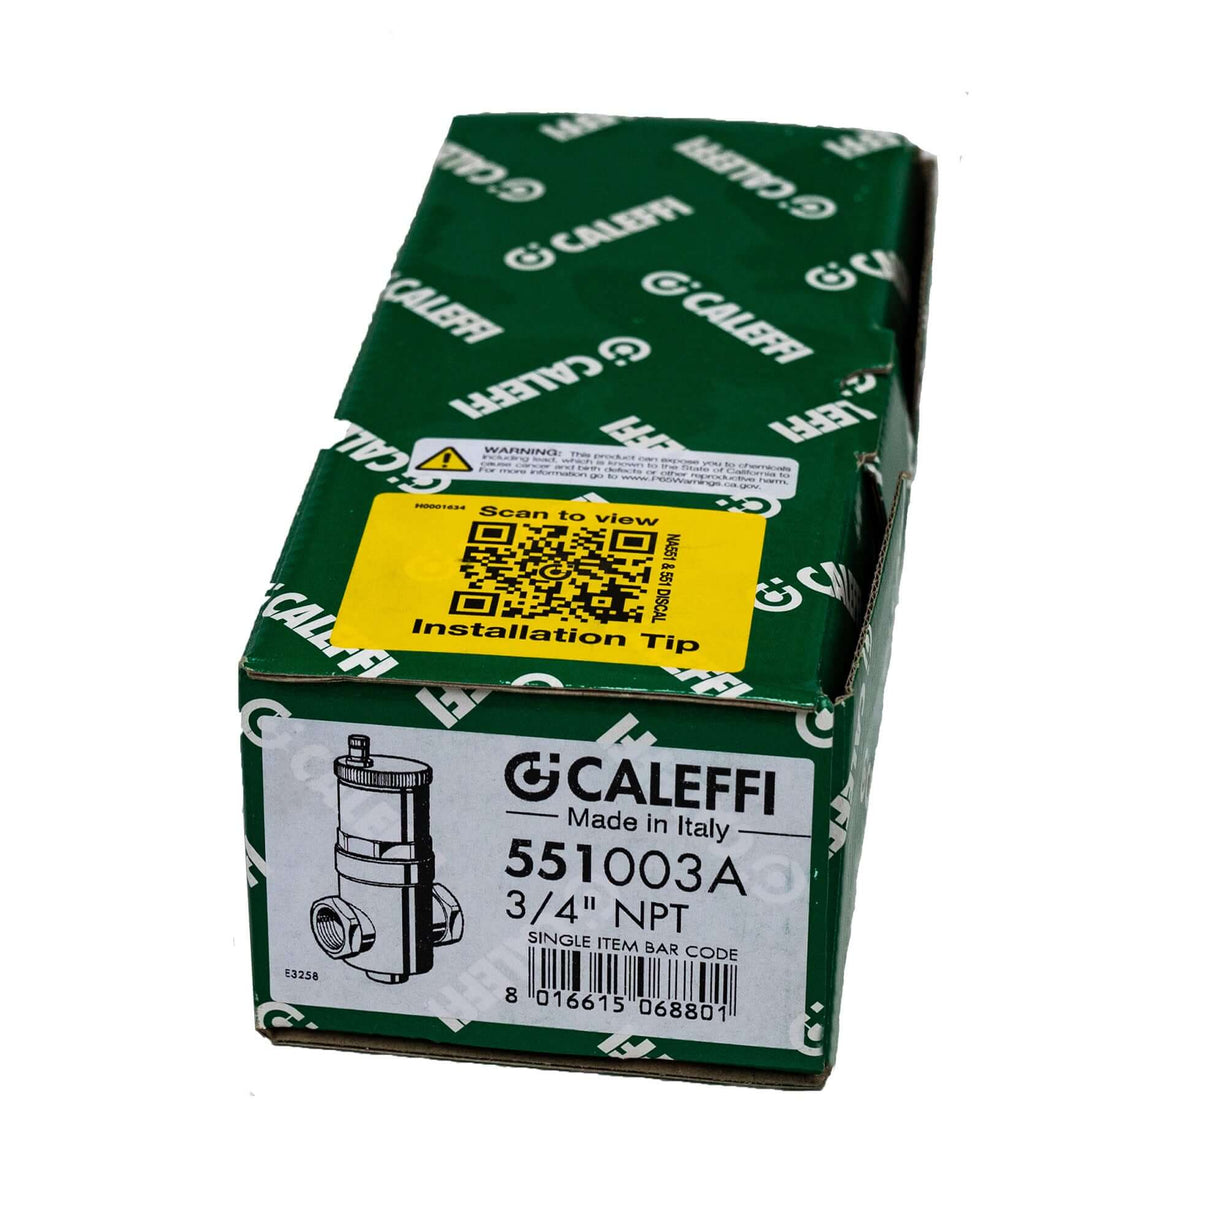 Box of the Caleffi 551003A 3/4" Compact Discal Air Separator